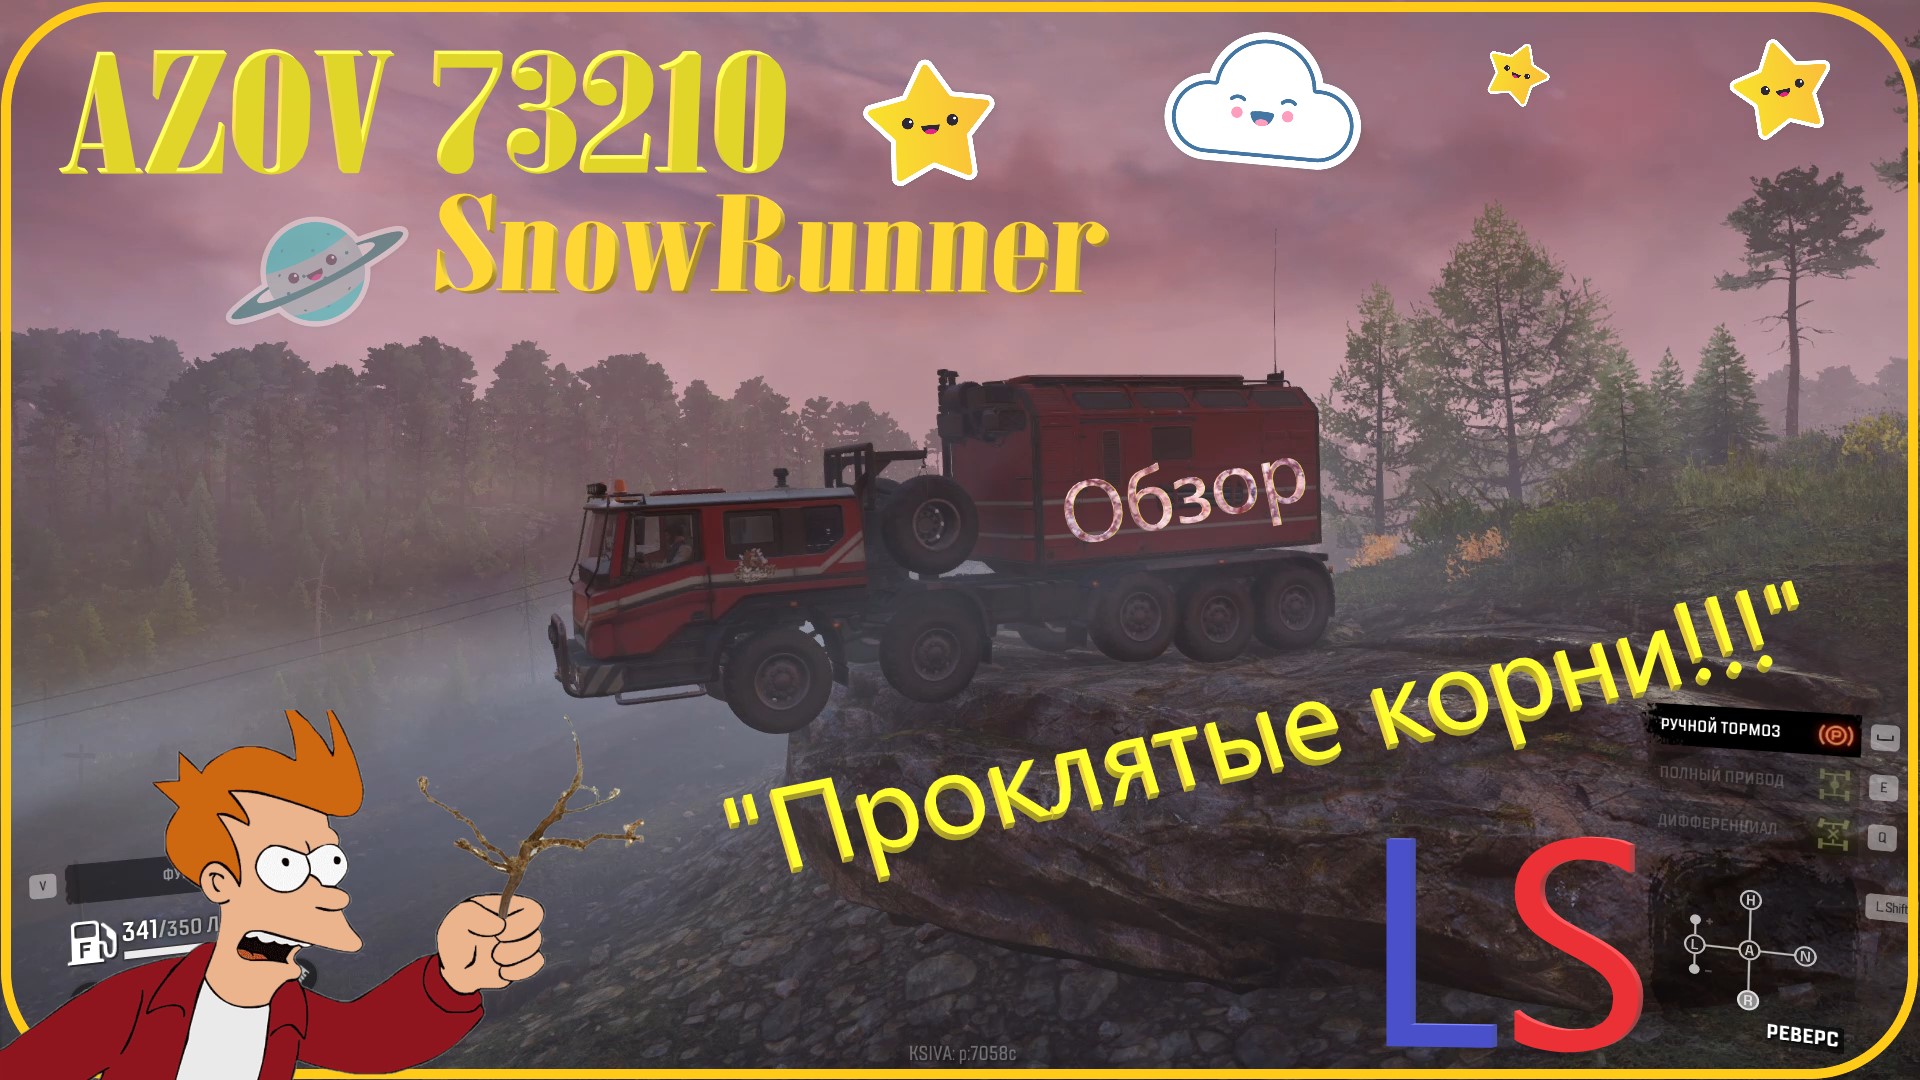 LS Azov 73210 обзор машины SnowRunner "Проклятые корни!!!"